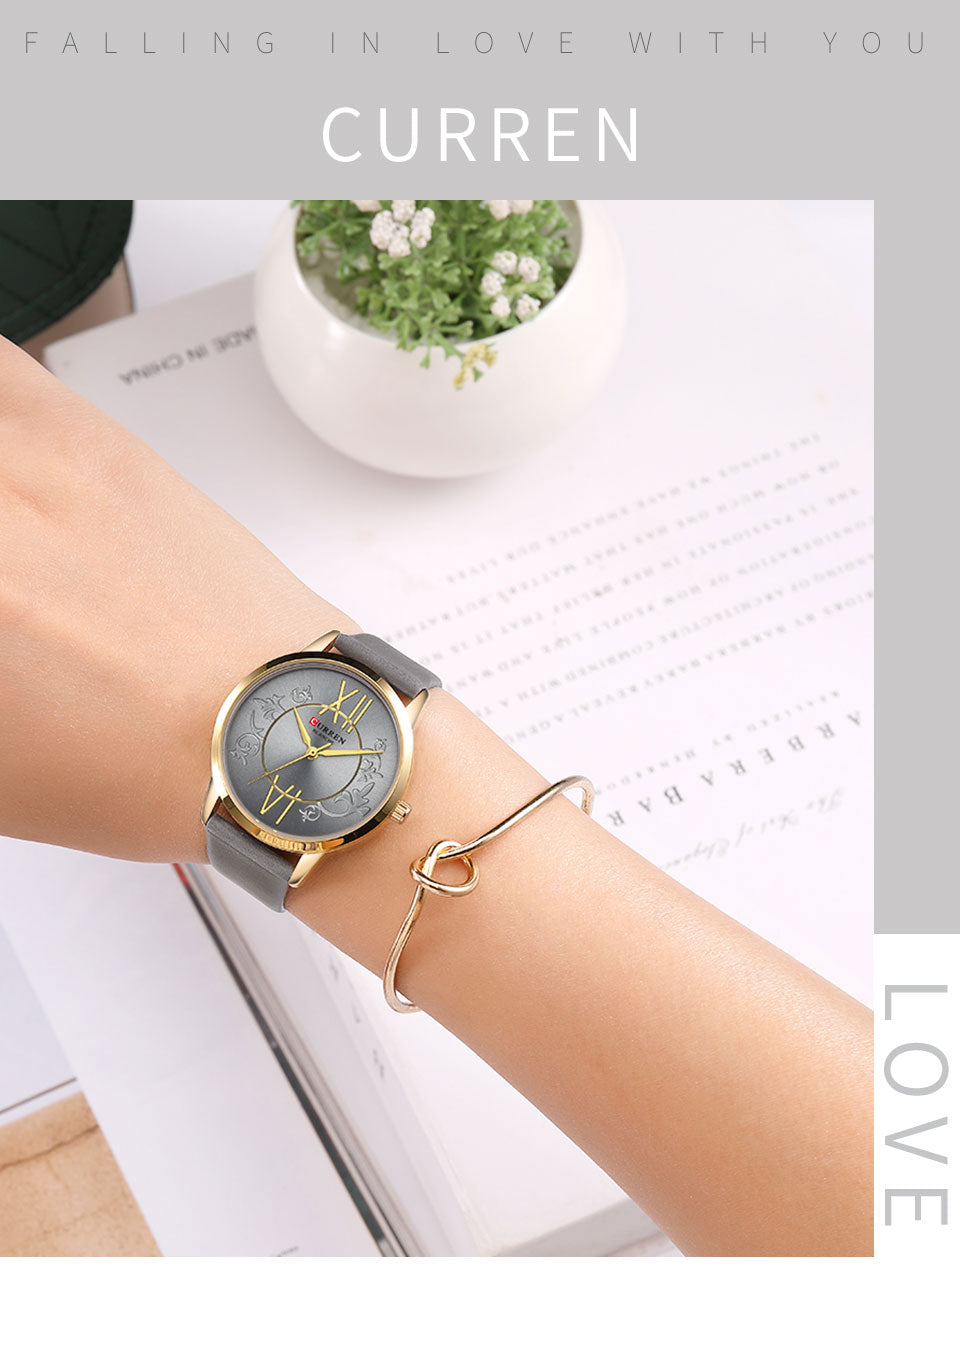 YSYH Watches Women Fashion Creative Analog Quartz Wrist Watch Reloj Mujer Casual Leather Ladies Clock Female Montre femme